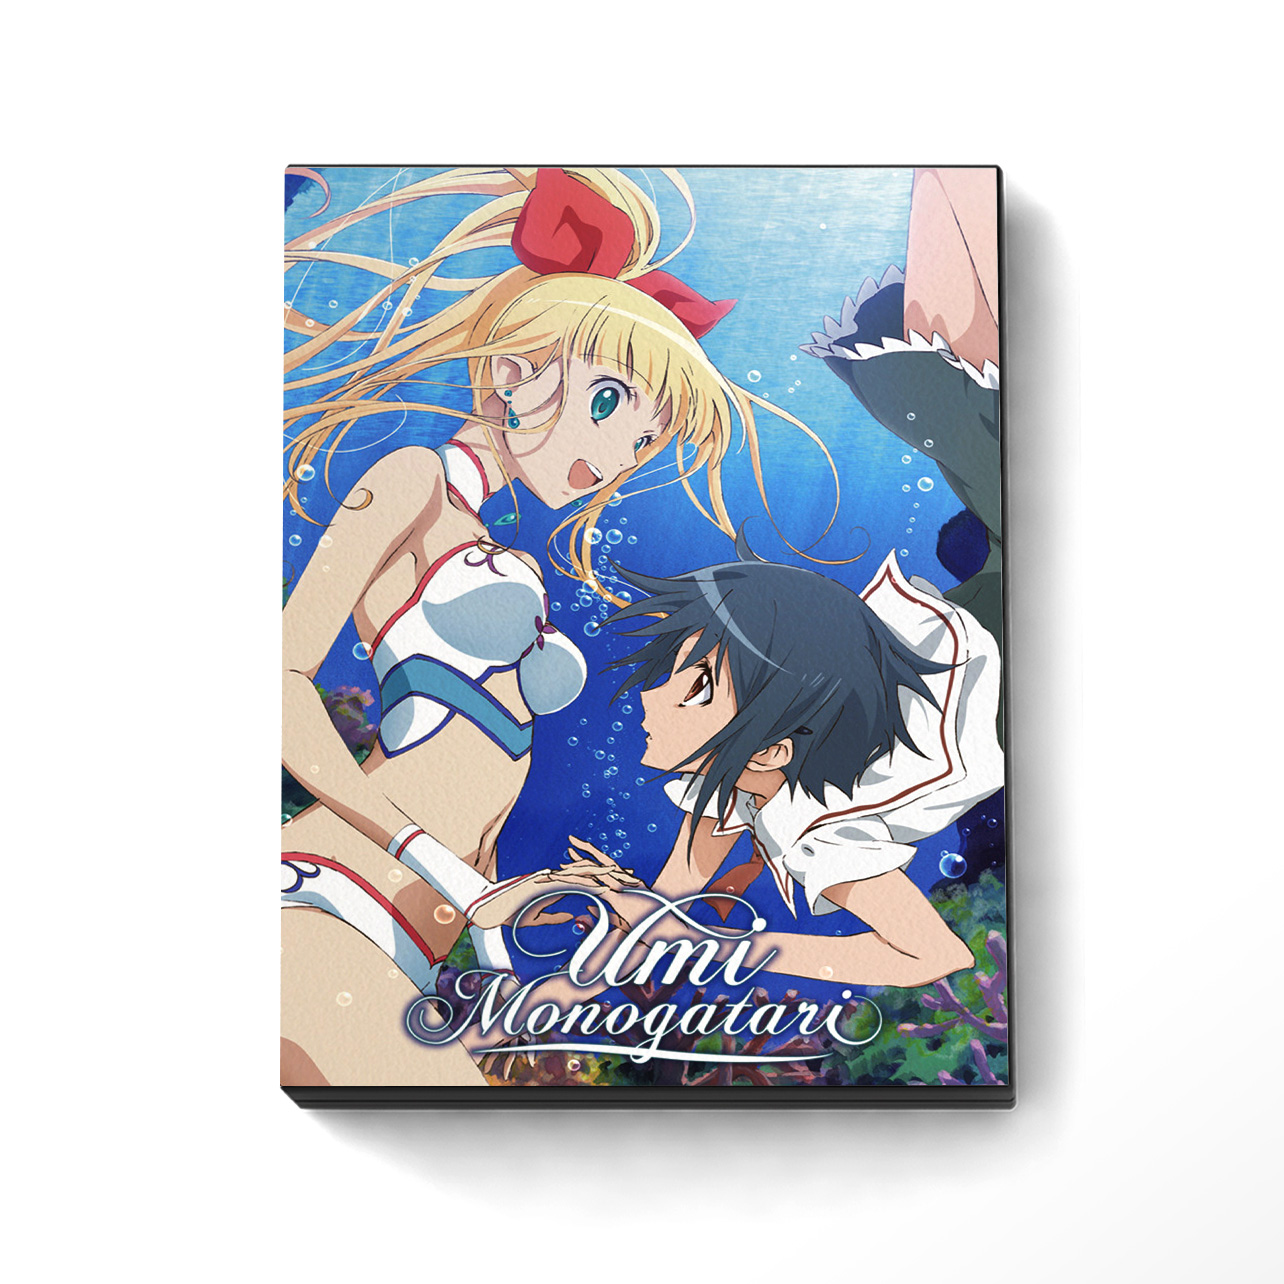 Umi Monogatari - The Complete Series - DVD image count 0